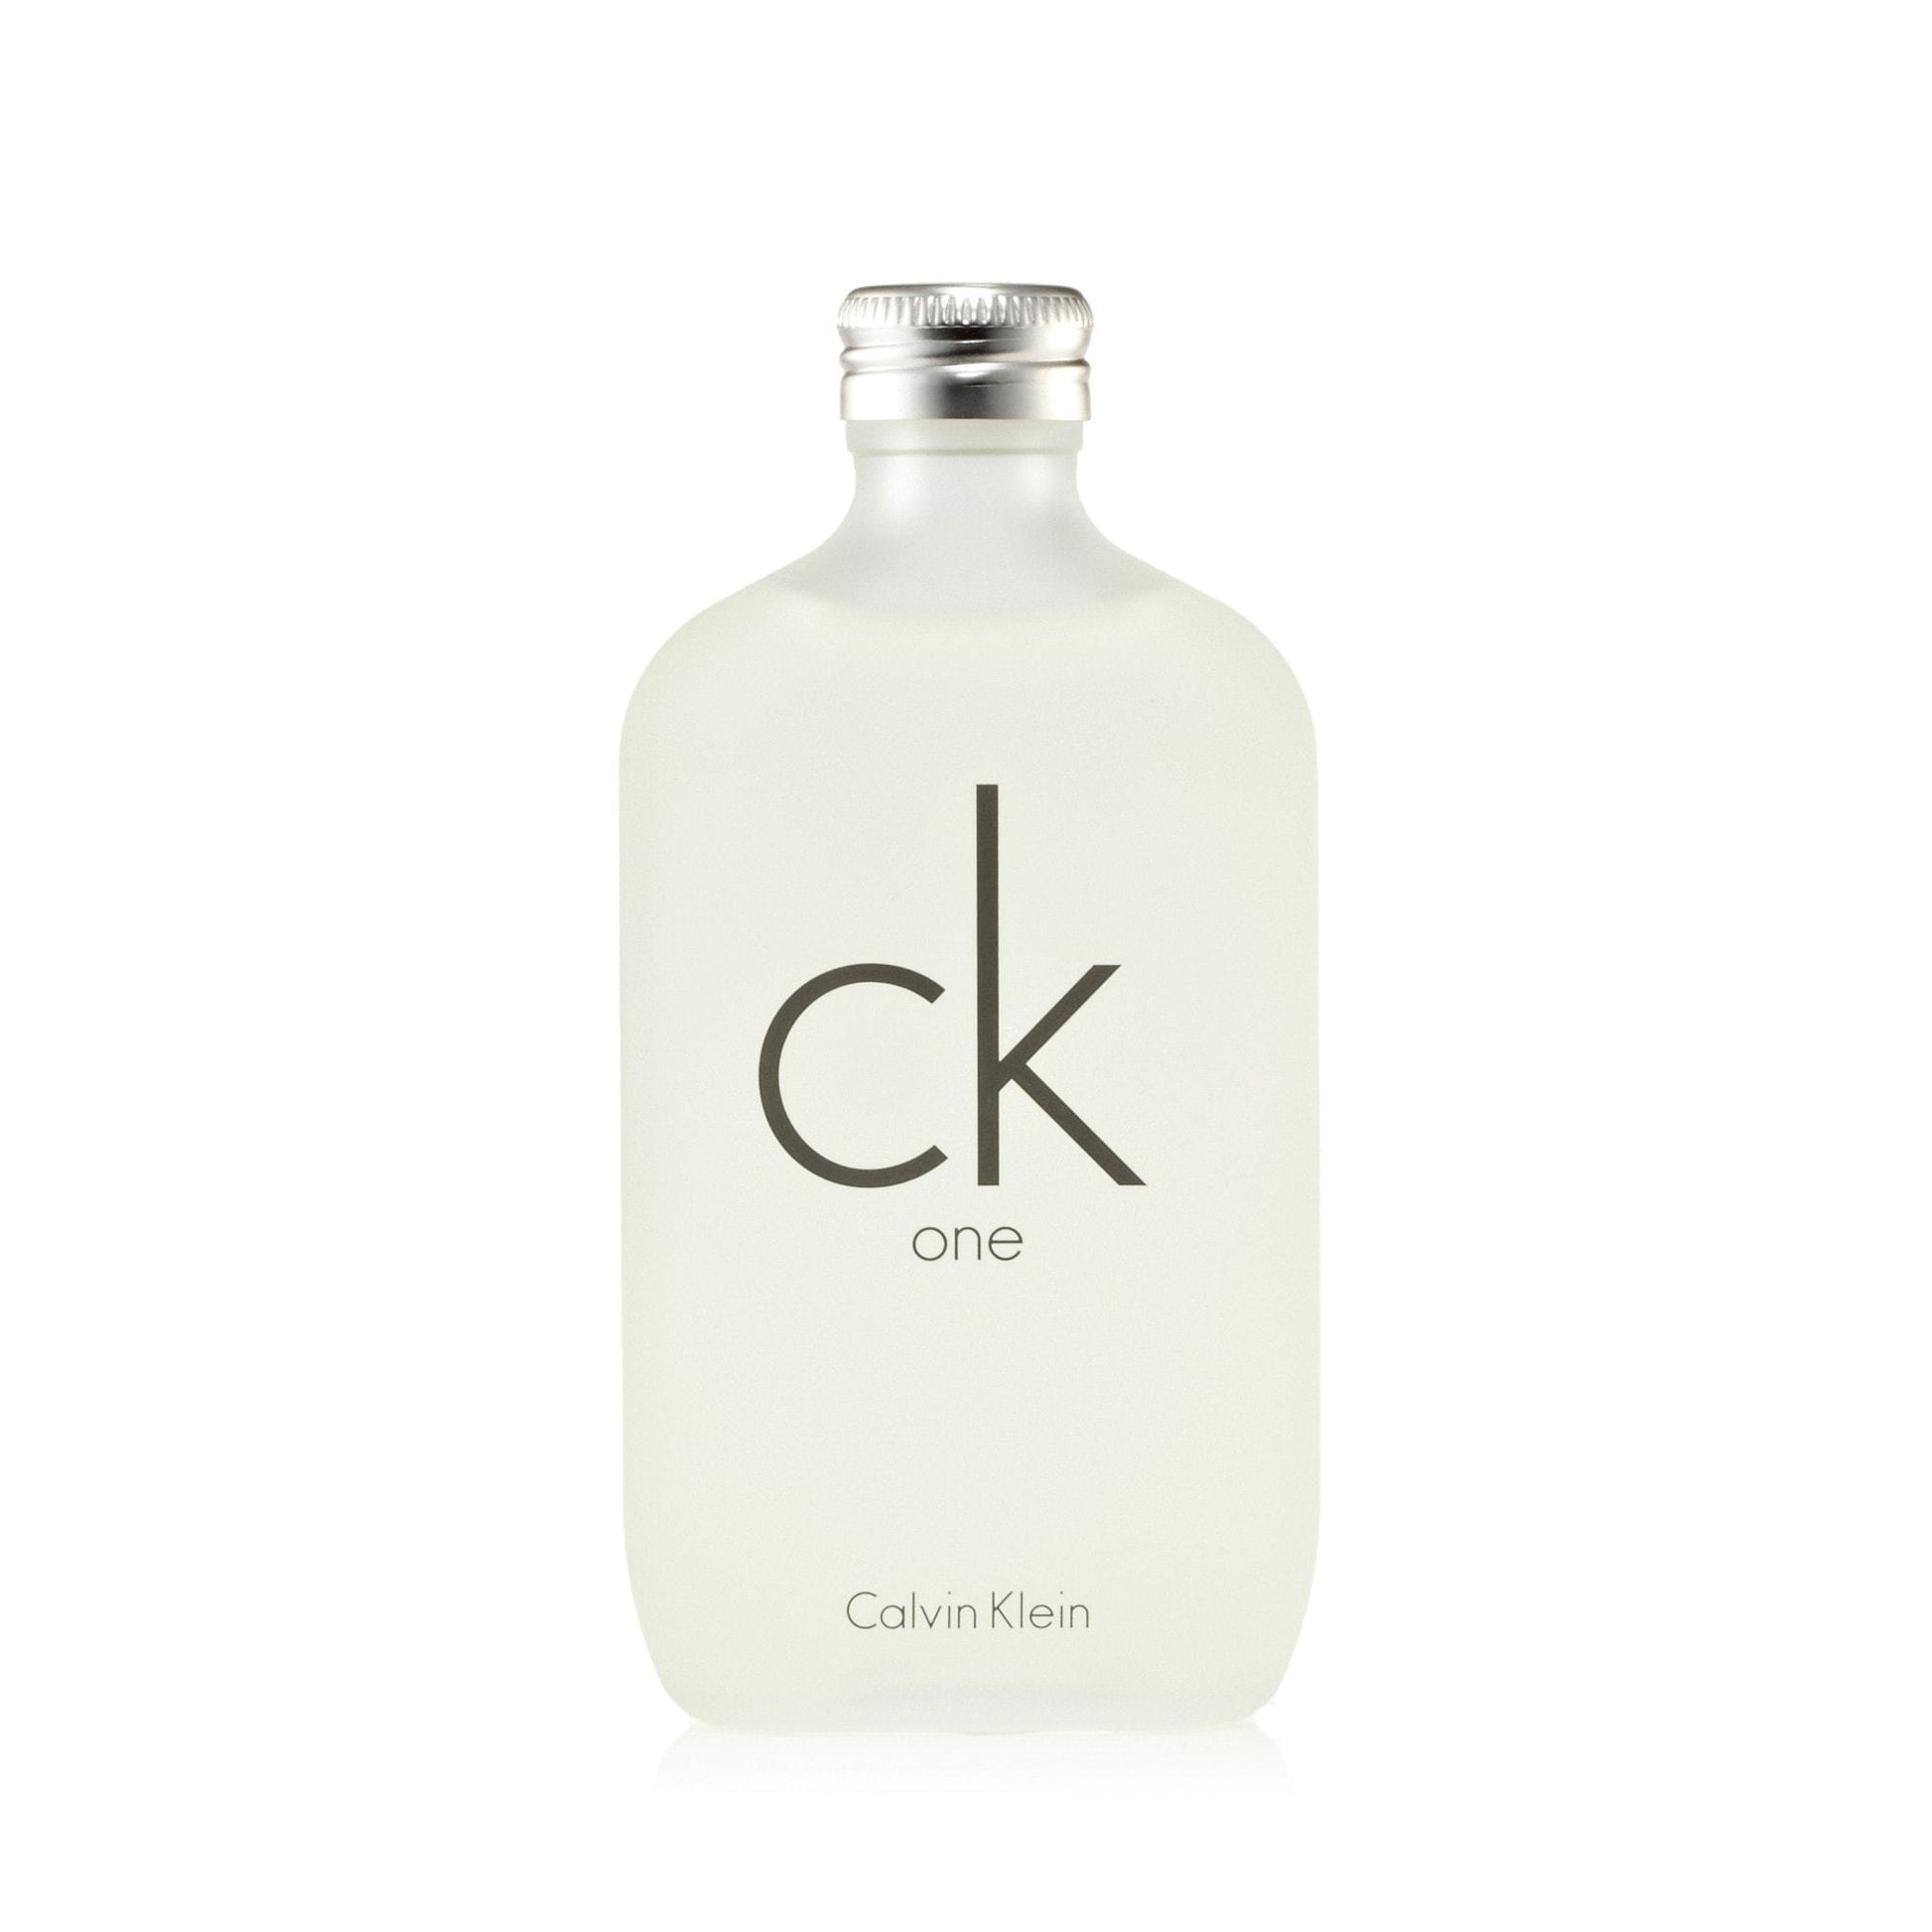 CK One Eau de Toilette Spray for Women and Men by Calvin Klein, Product image 2